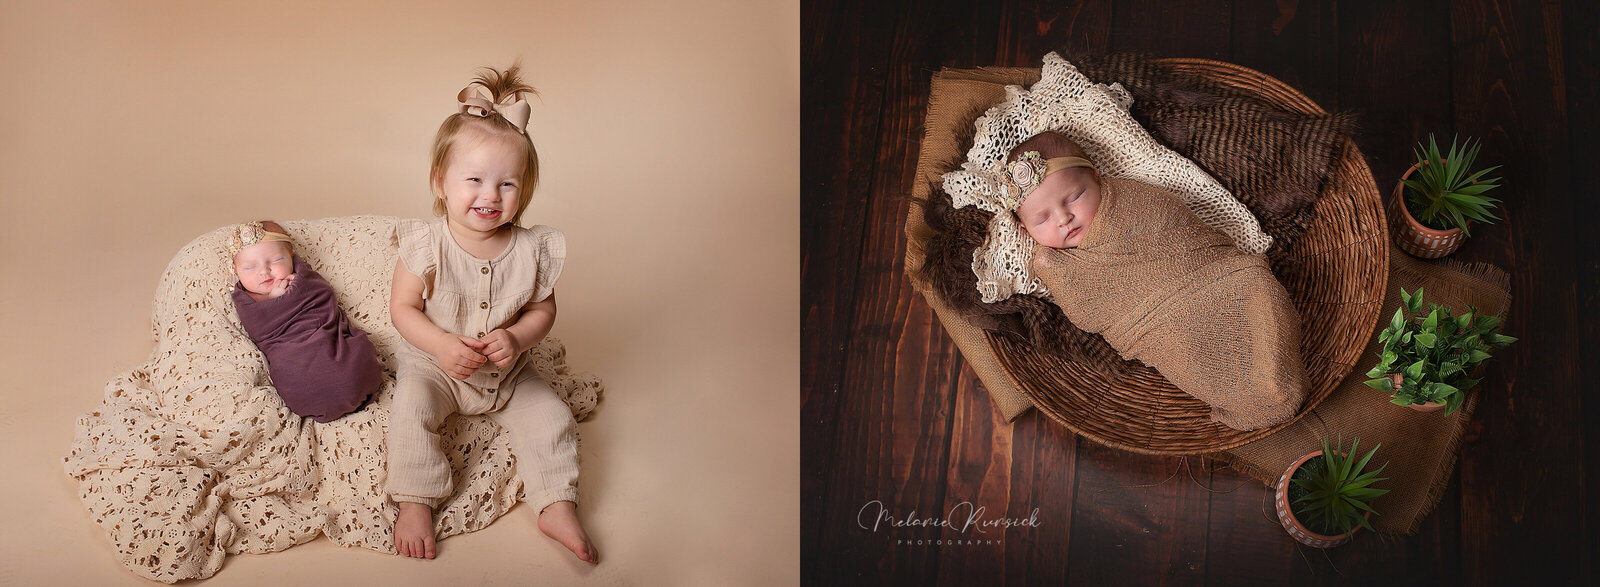 Melanie Runsick Photography Northeast Arkansas Newborn and Children's Photographer